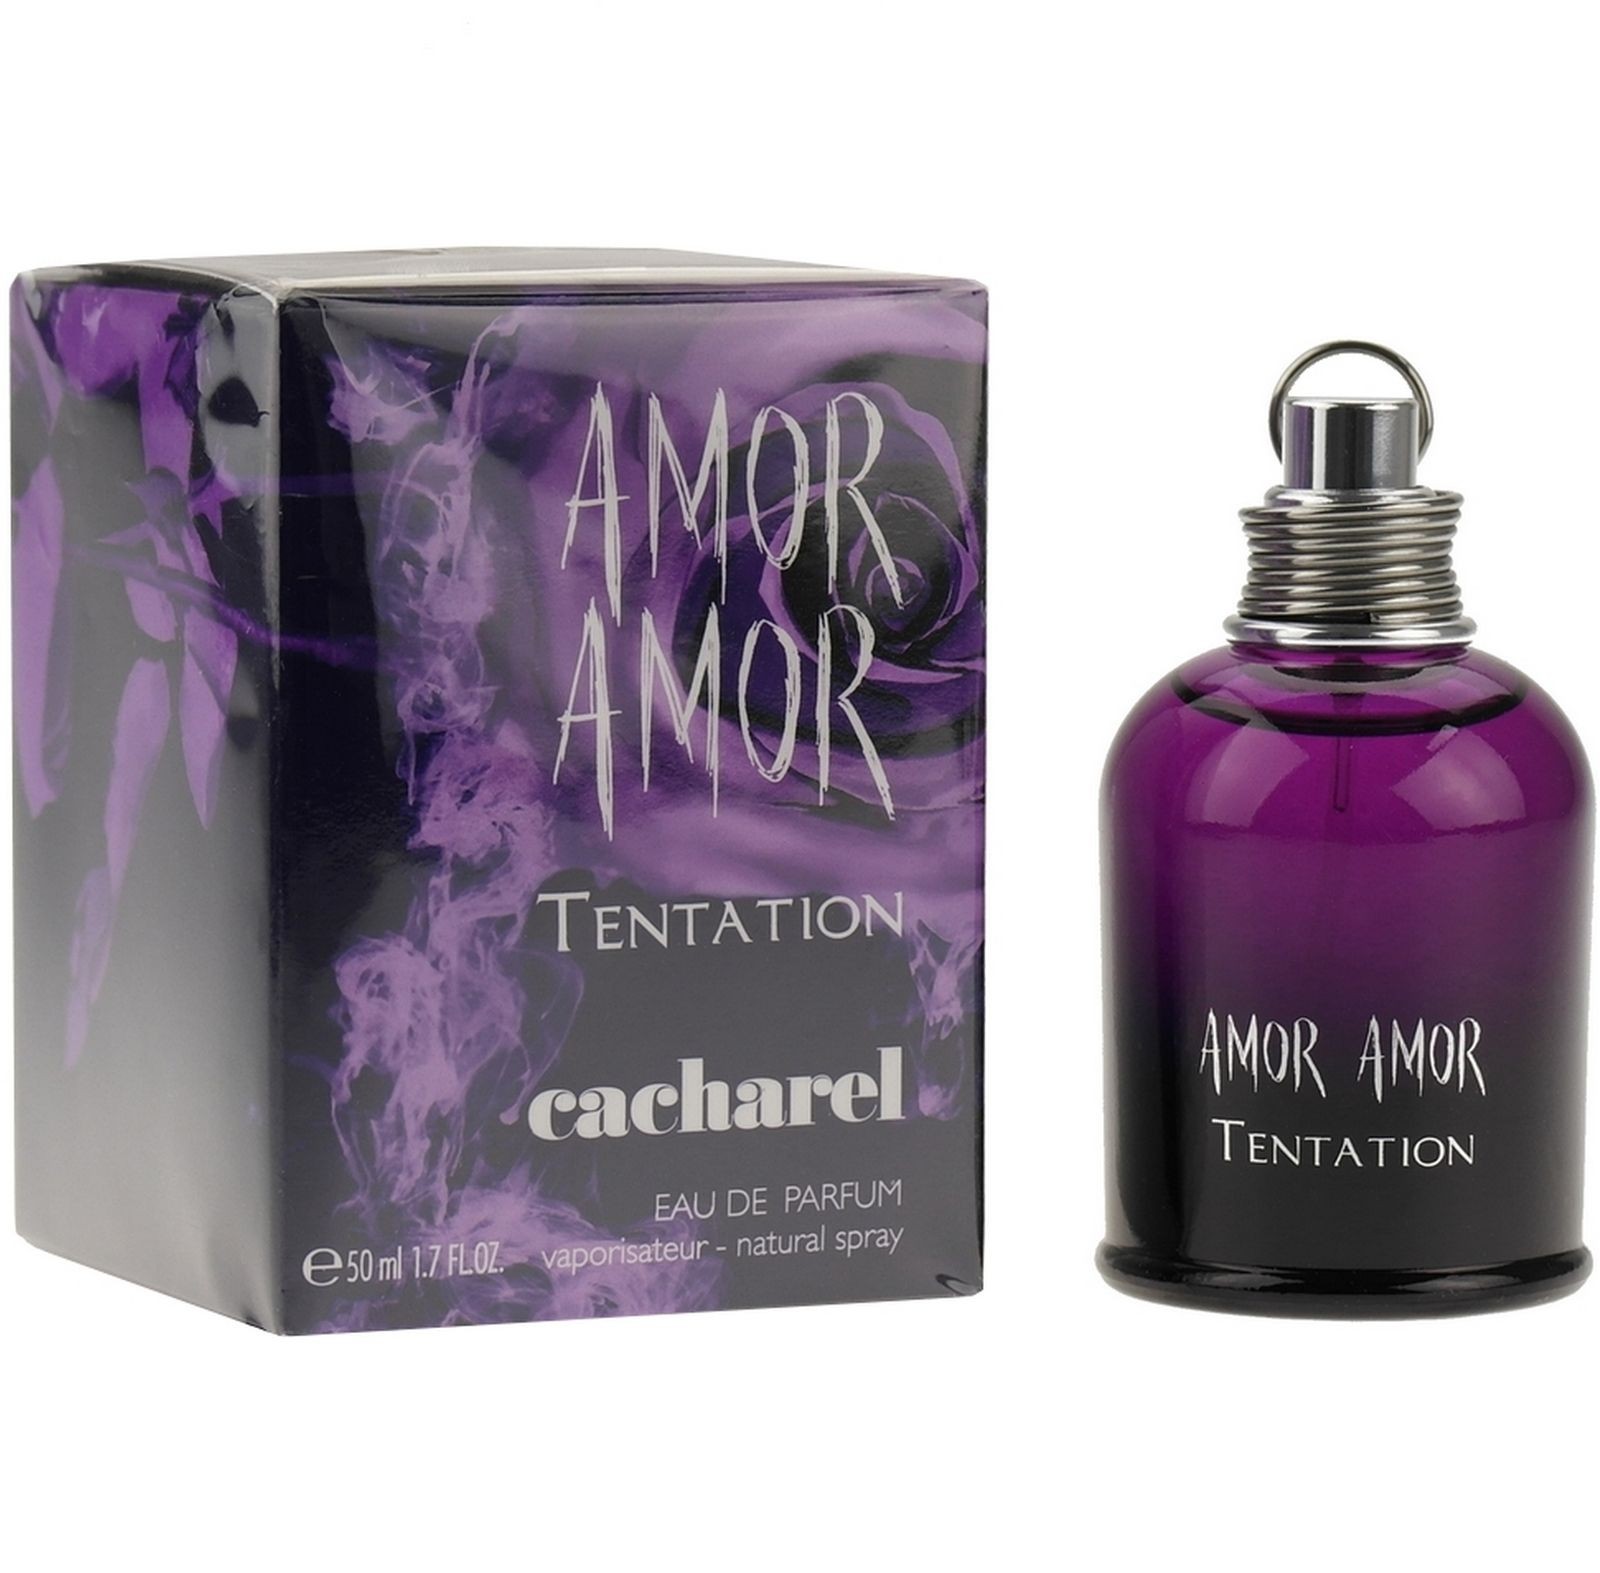 Image of Amor Amor Tentation Eau De Parfum Cacharel 50ml